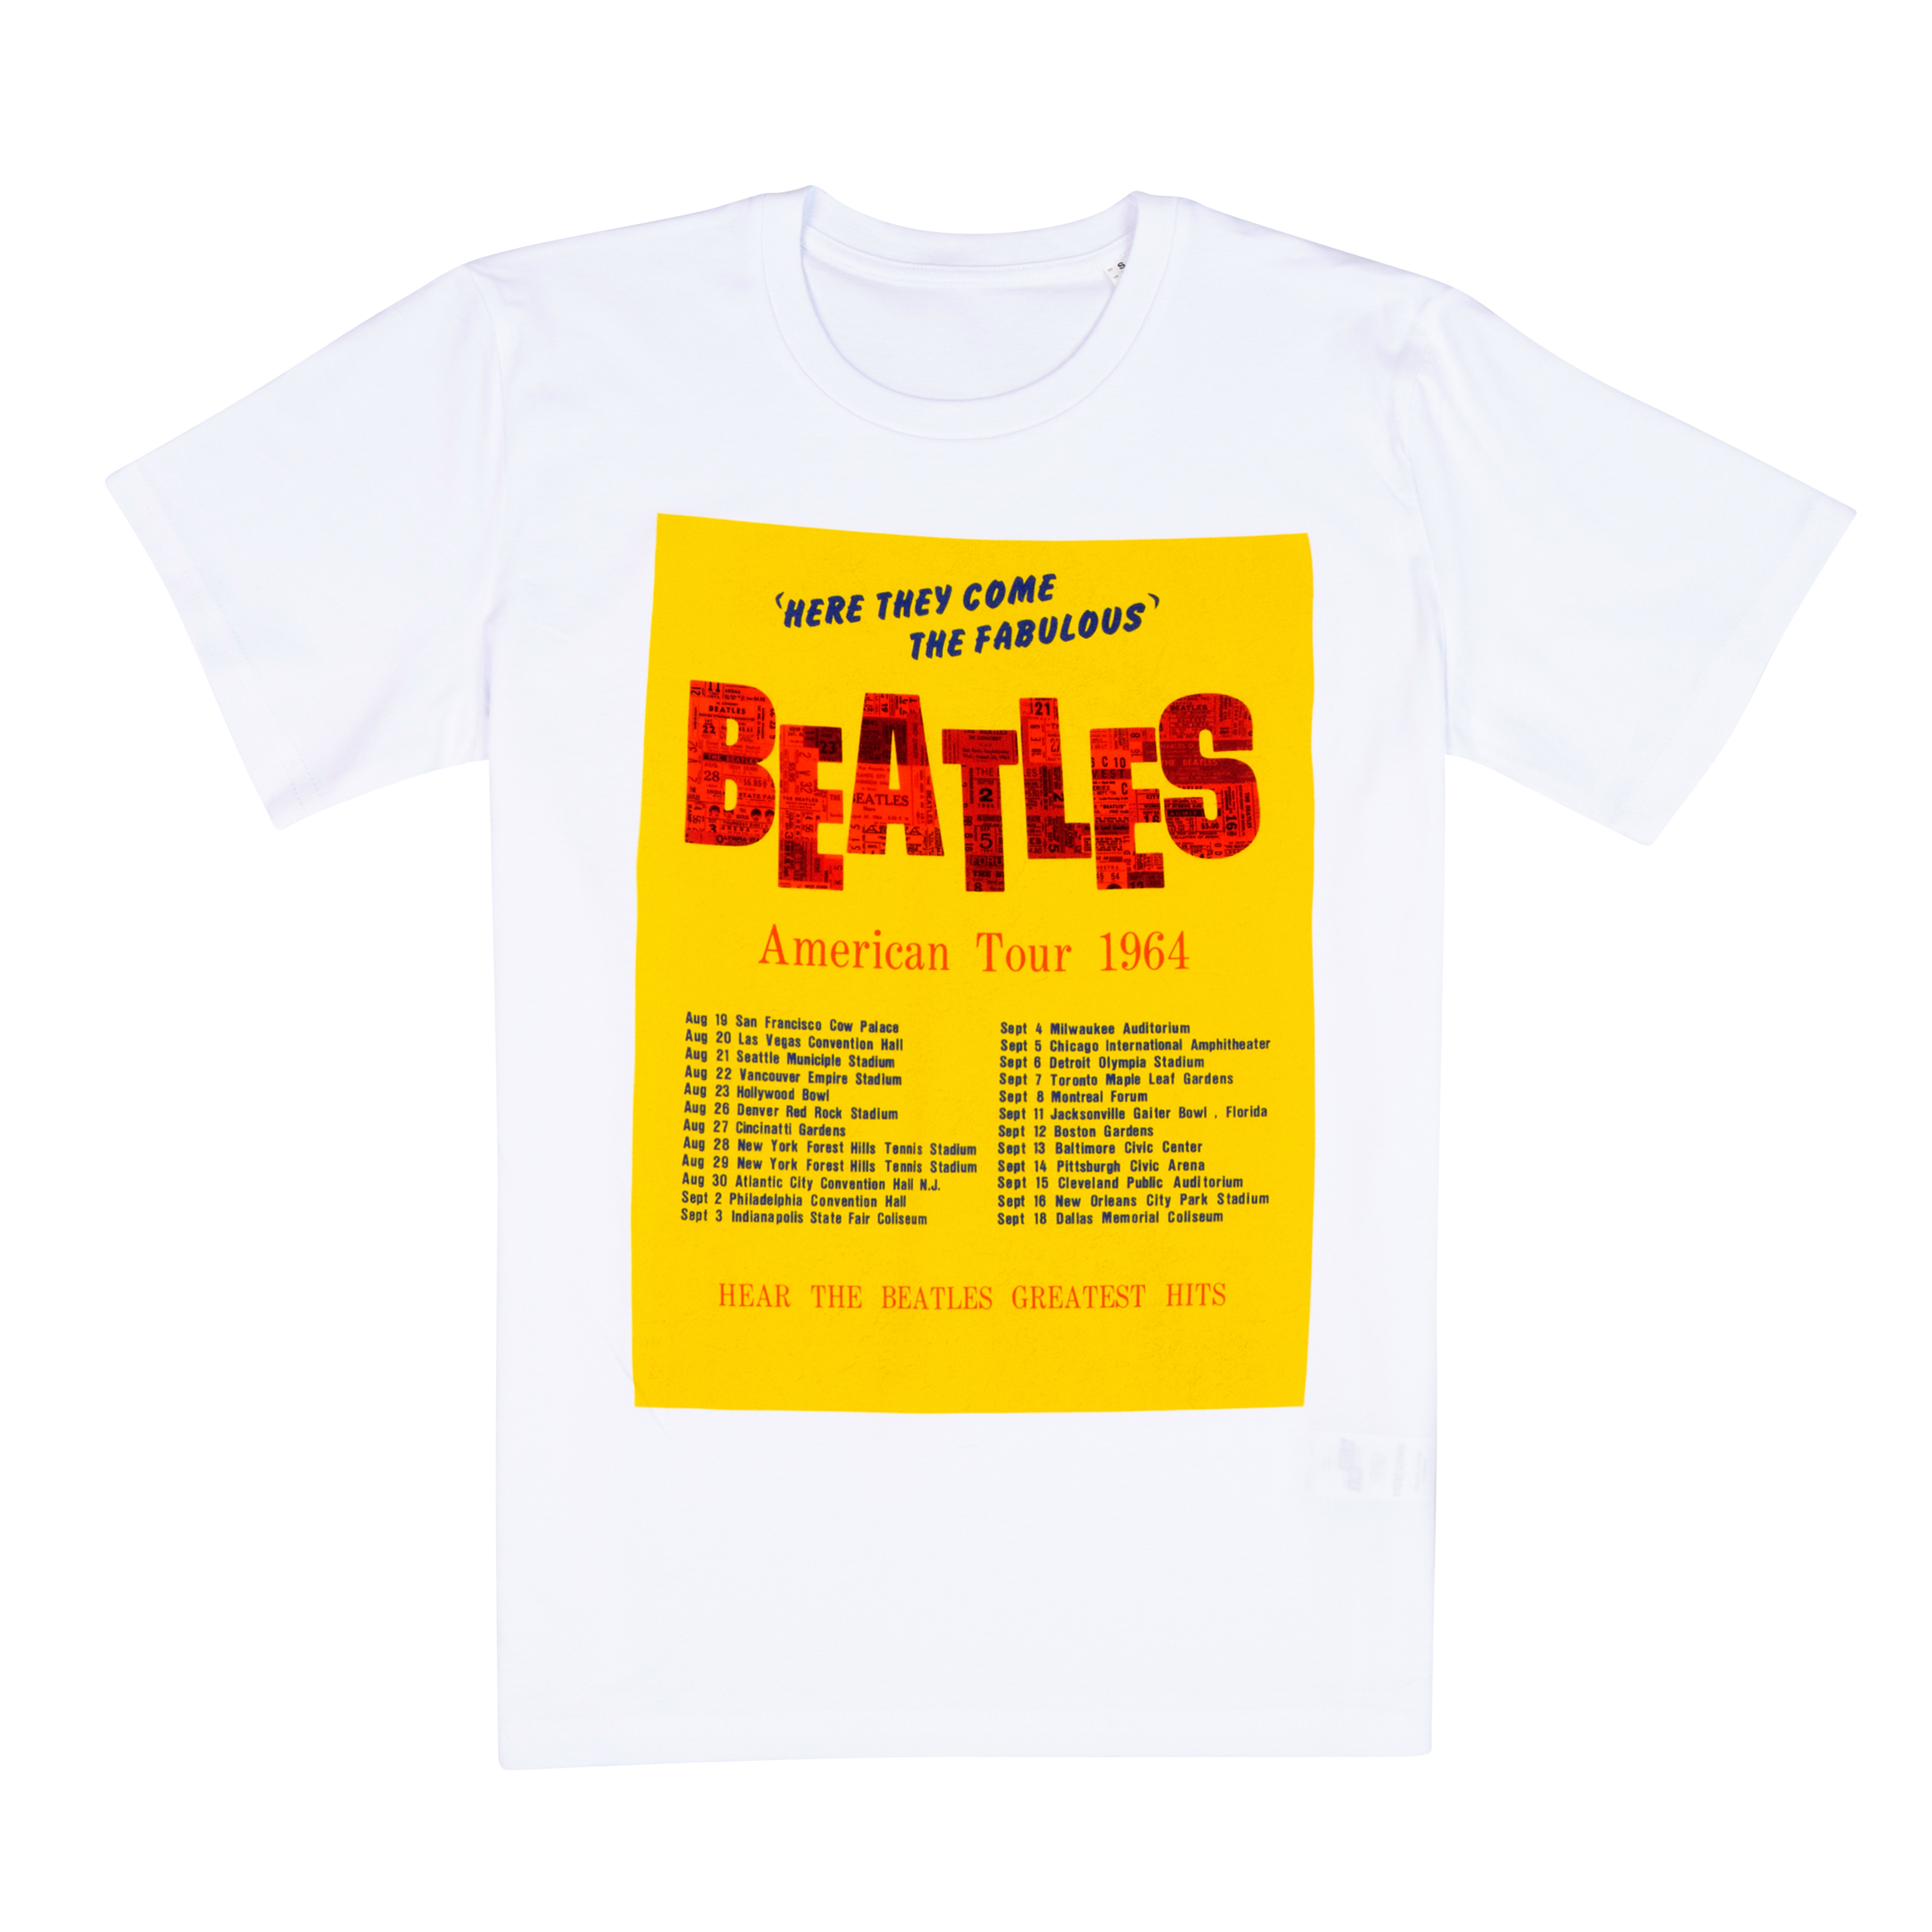 The Beatles - American Tour 1964 White T-shirt